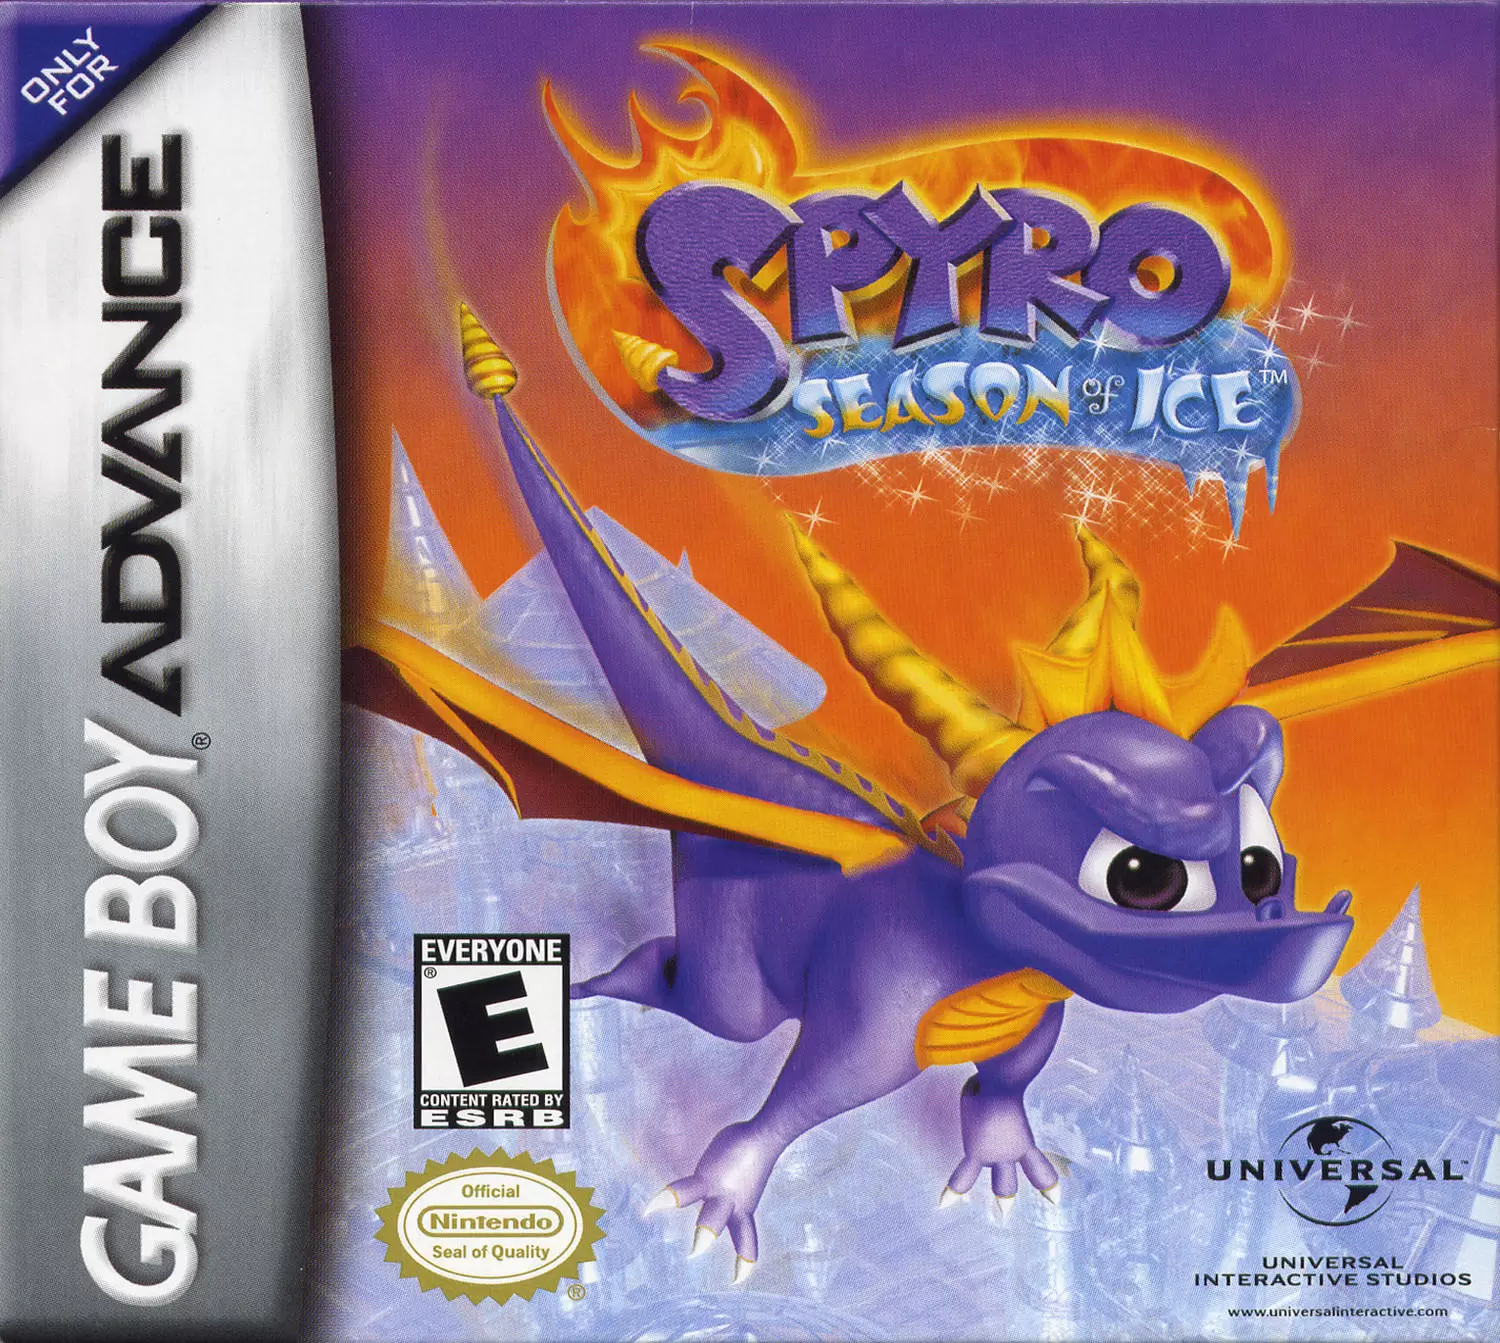 Game Boy Advance Games - Spyro: Season of Ice